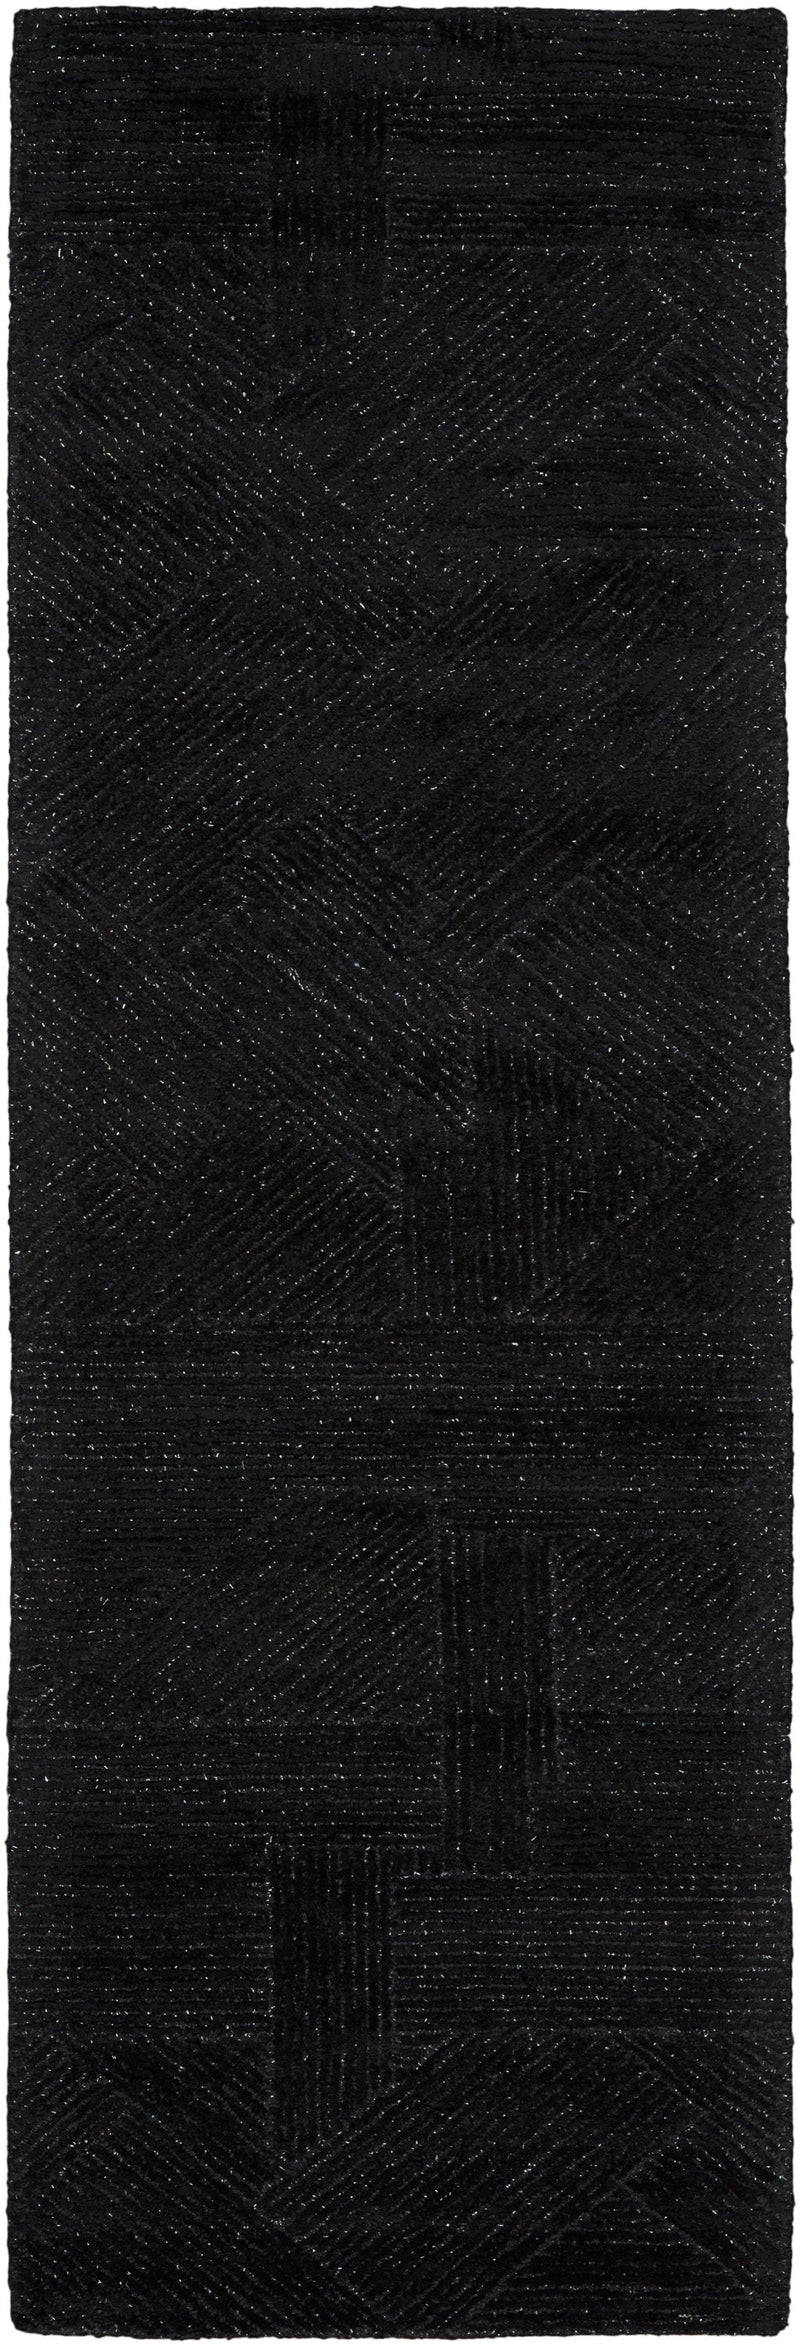 media image for ma30 star handmade black rug by nourison 99446880871 redo 2 216